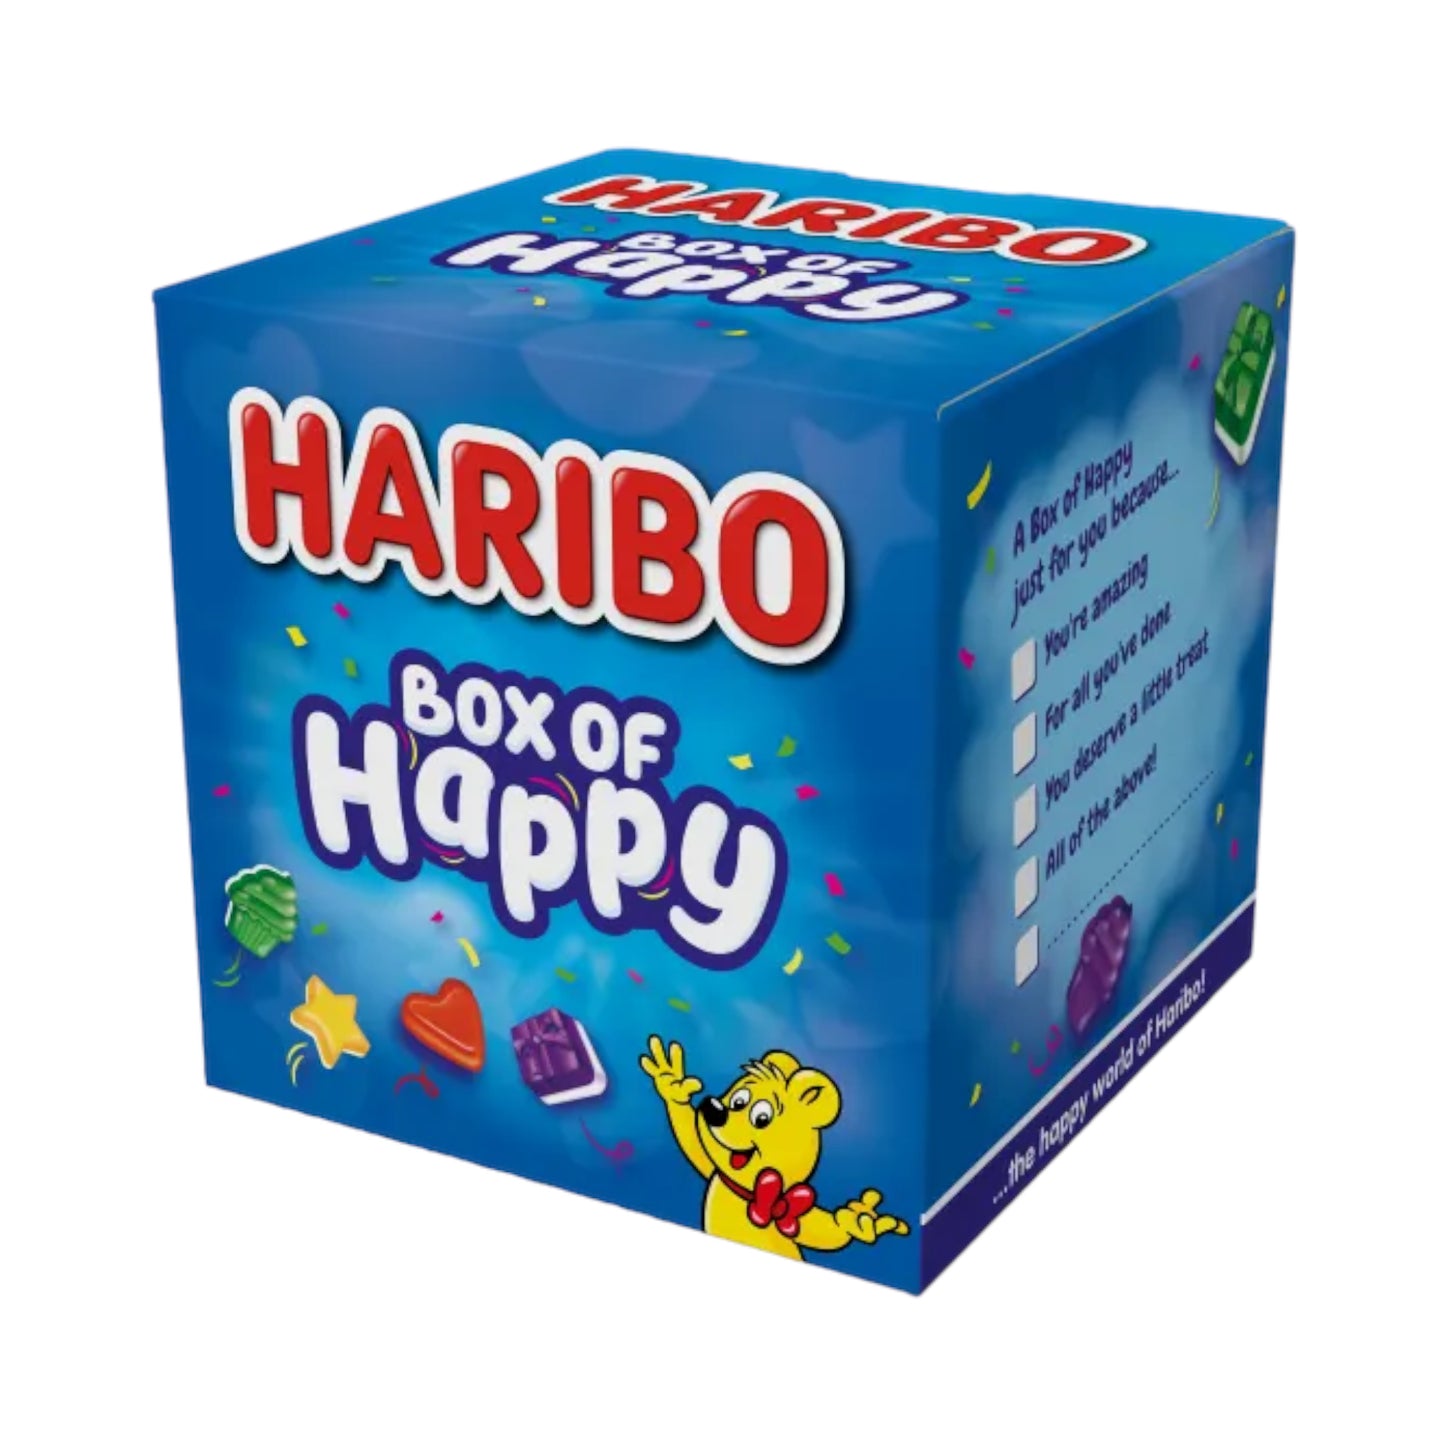 Haribo Box of Happy - 120g